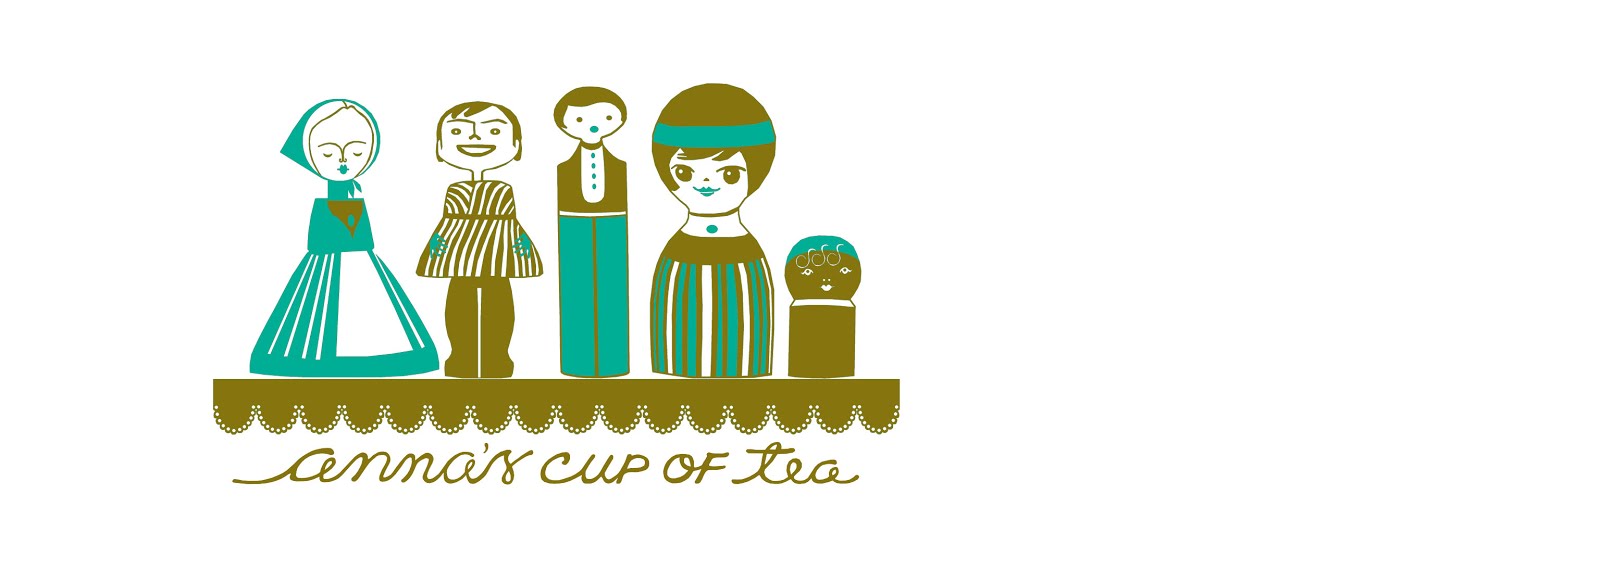 anna's cup of tea